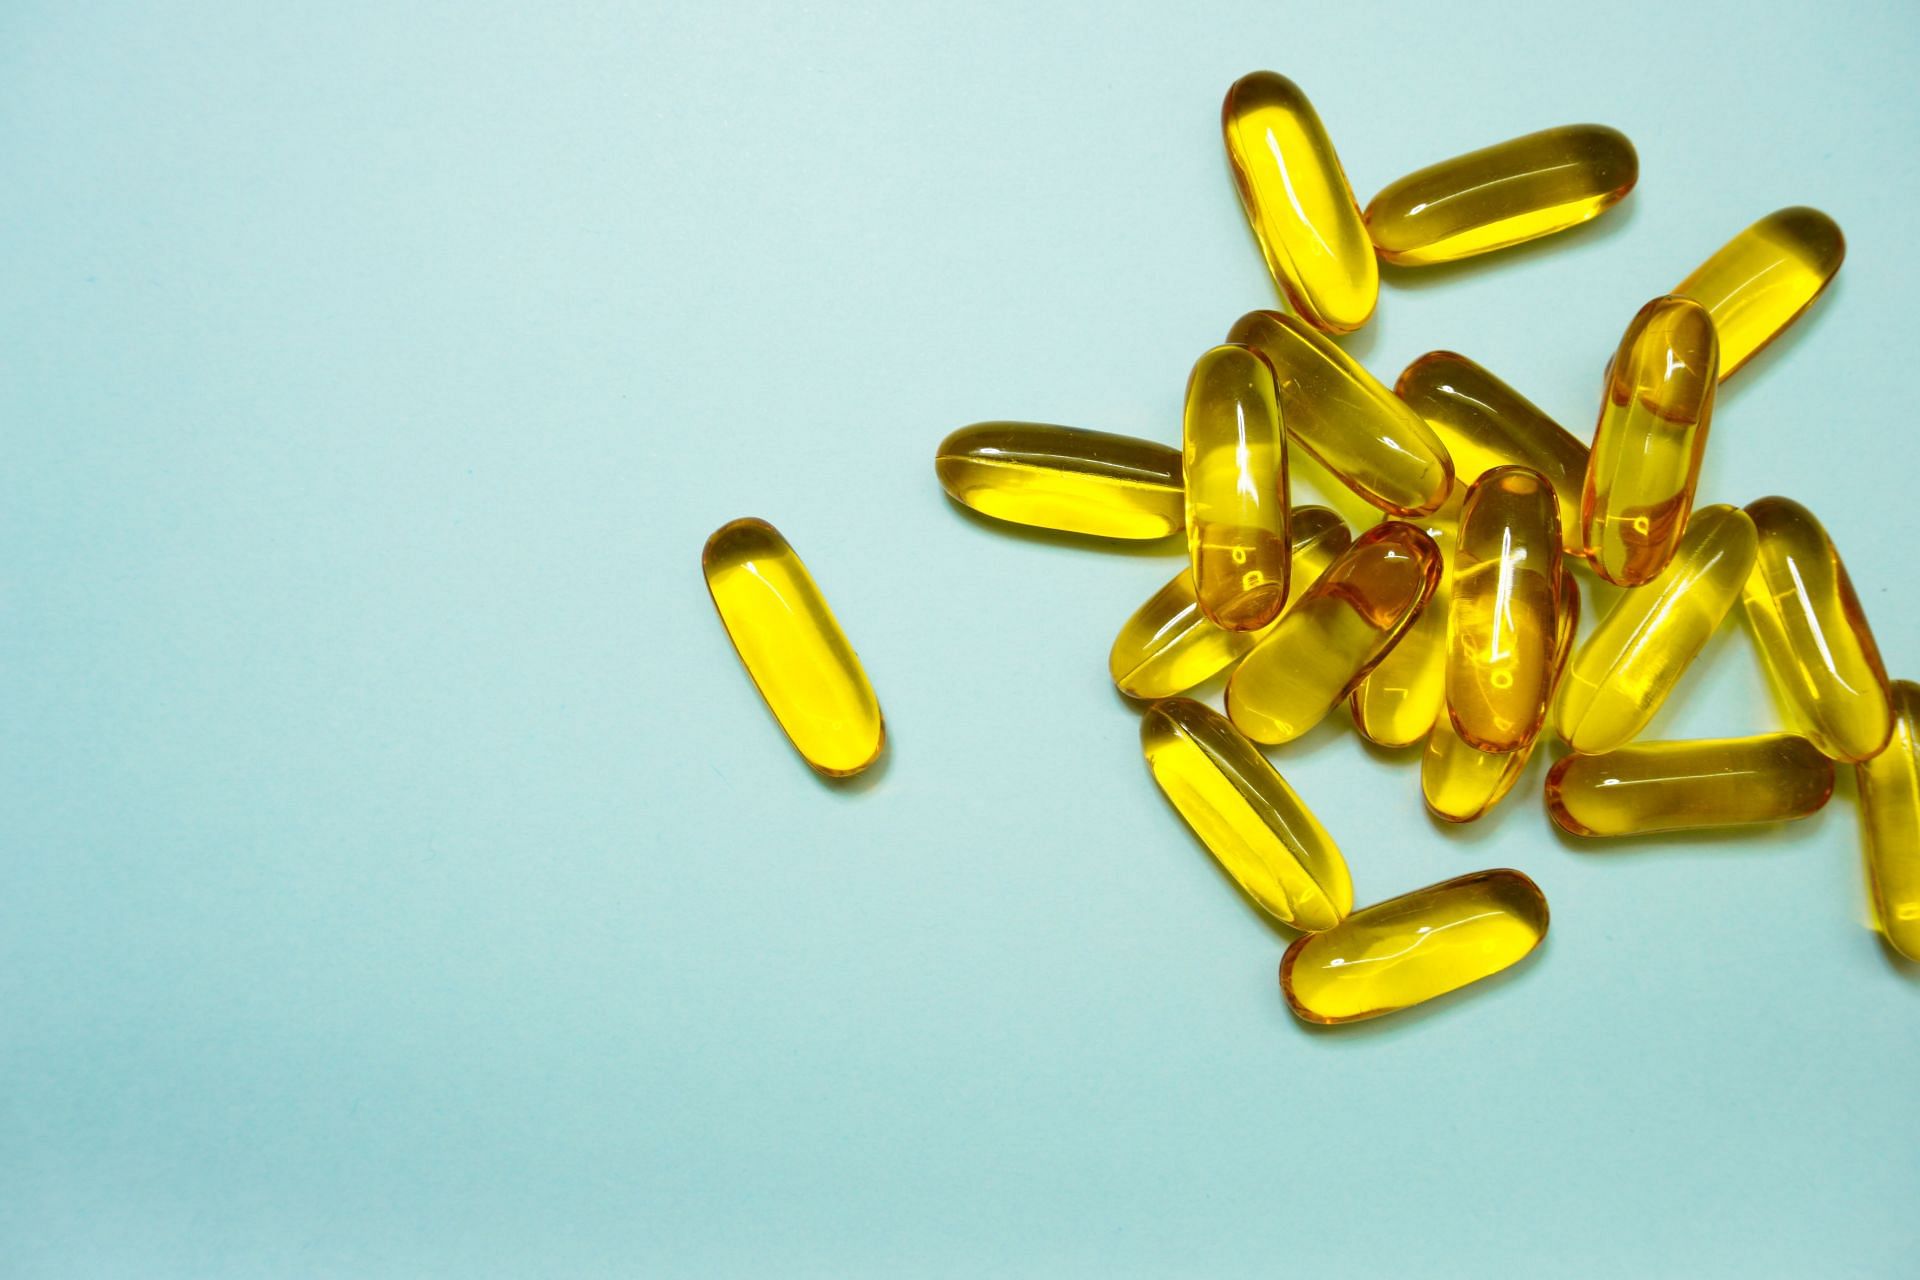 Omega 3 fish oils can reduce inflammation in the body (Image via Unsplash/Leohoho)